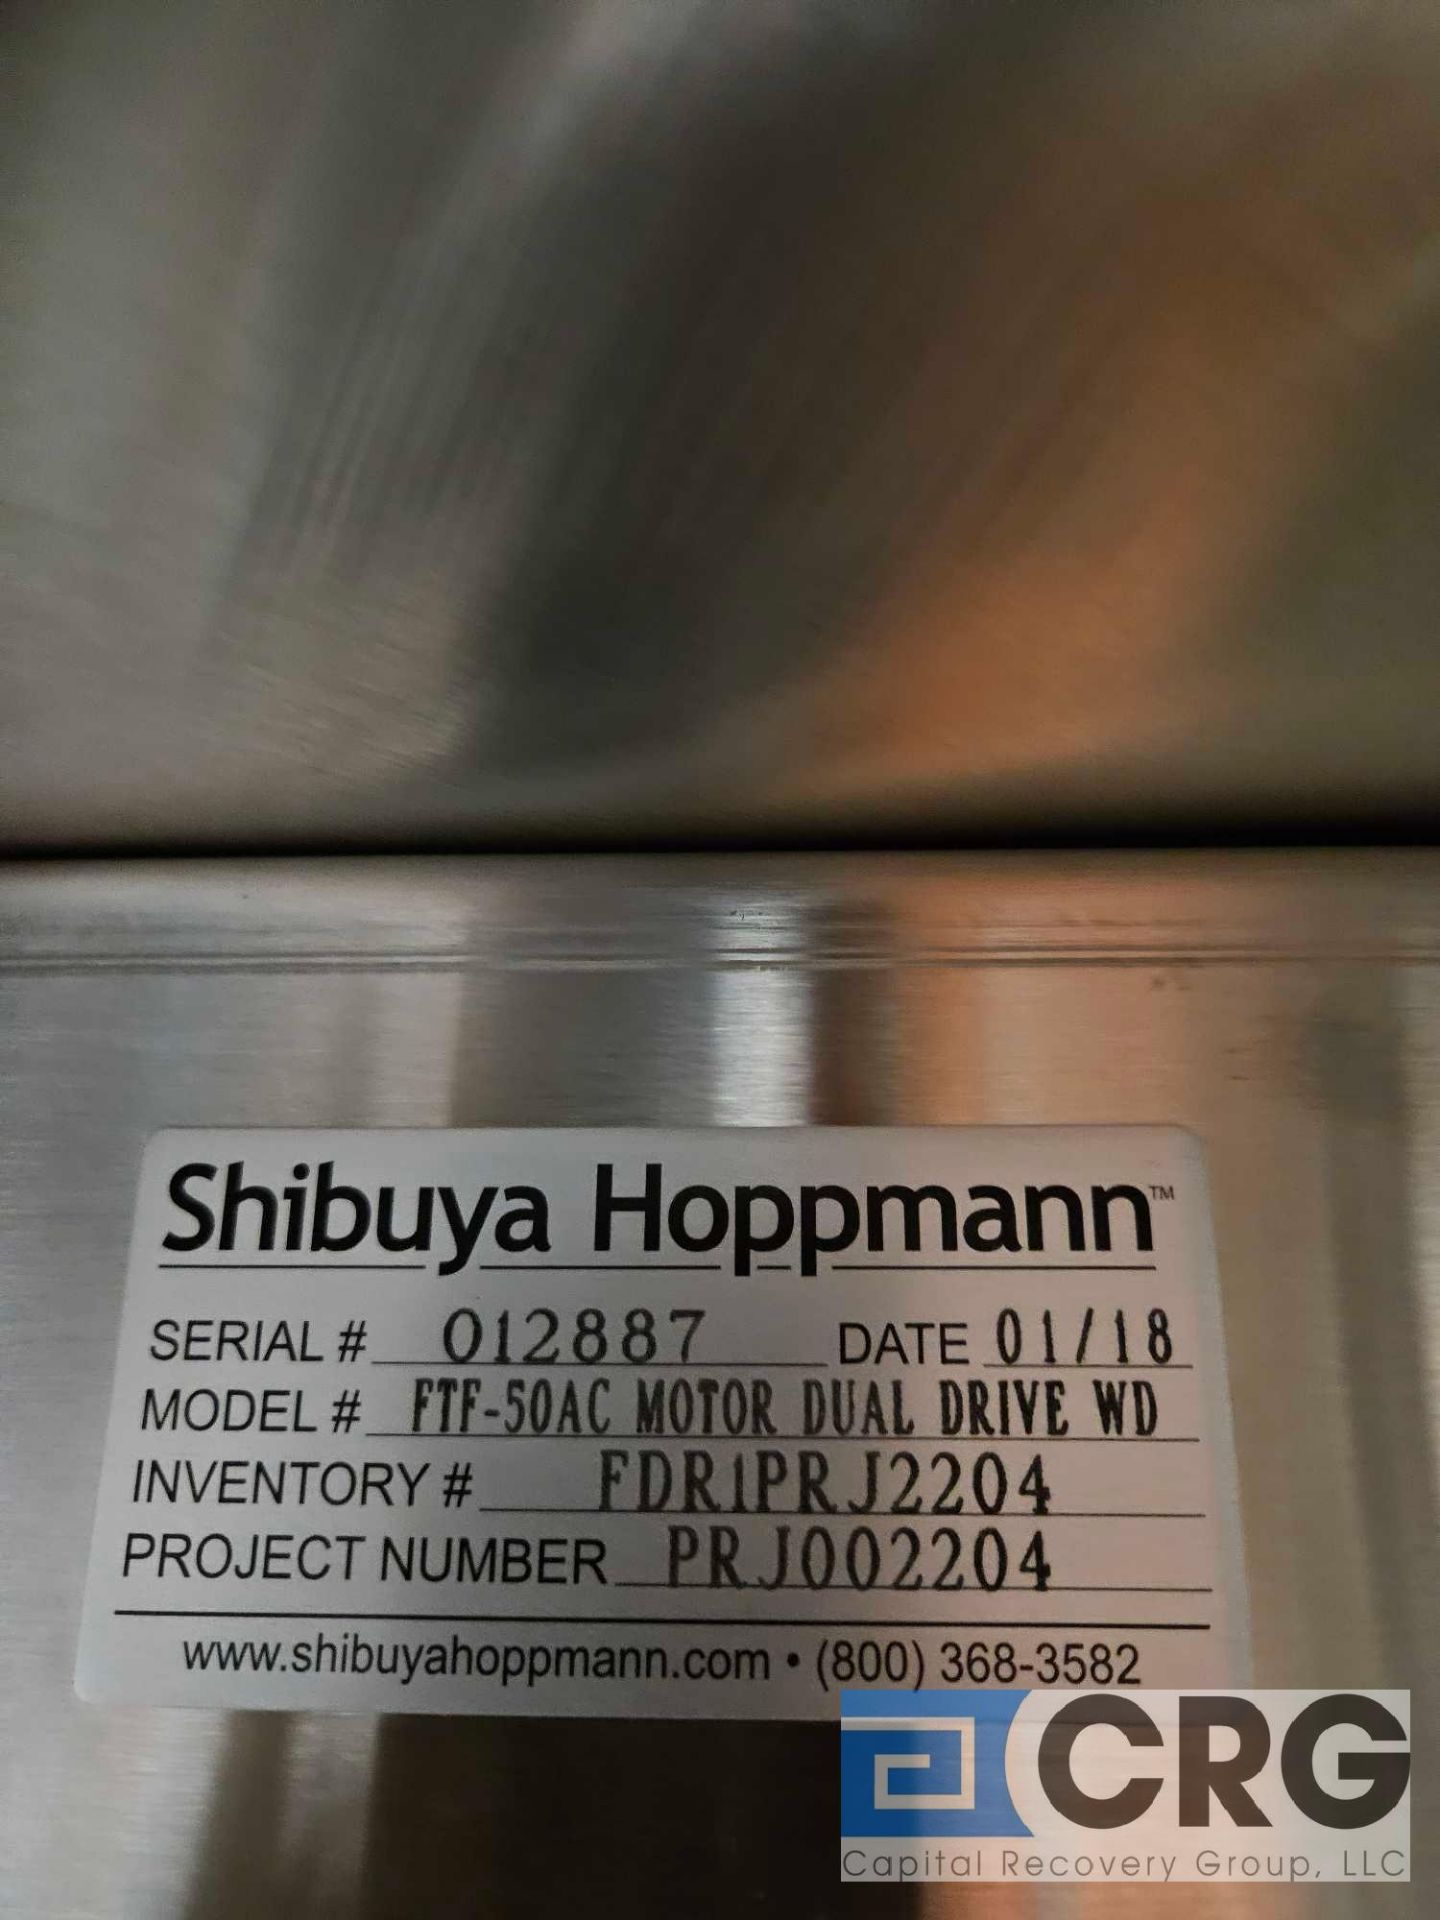 Shibuya Hoppman Motor Dual Drive - Image 4 of 4